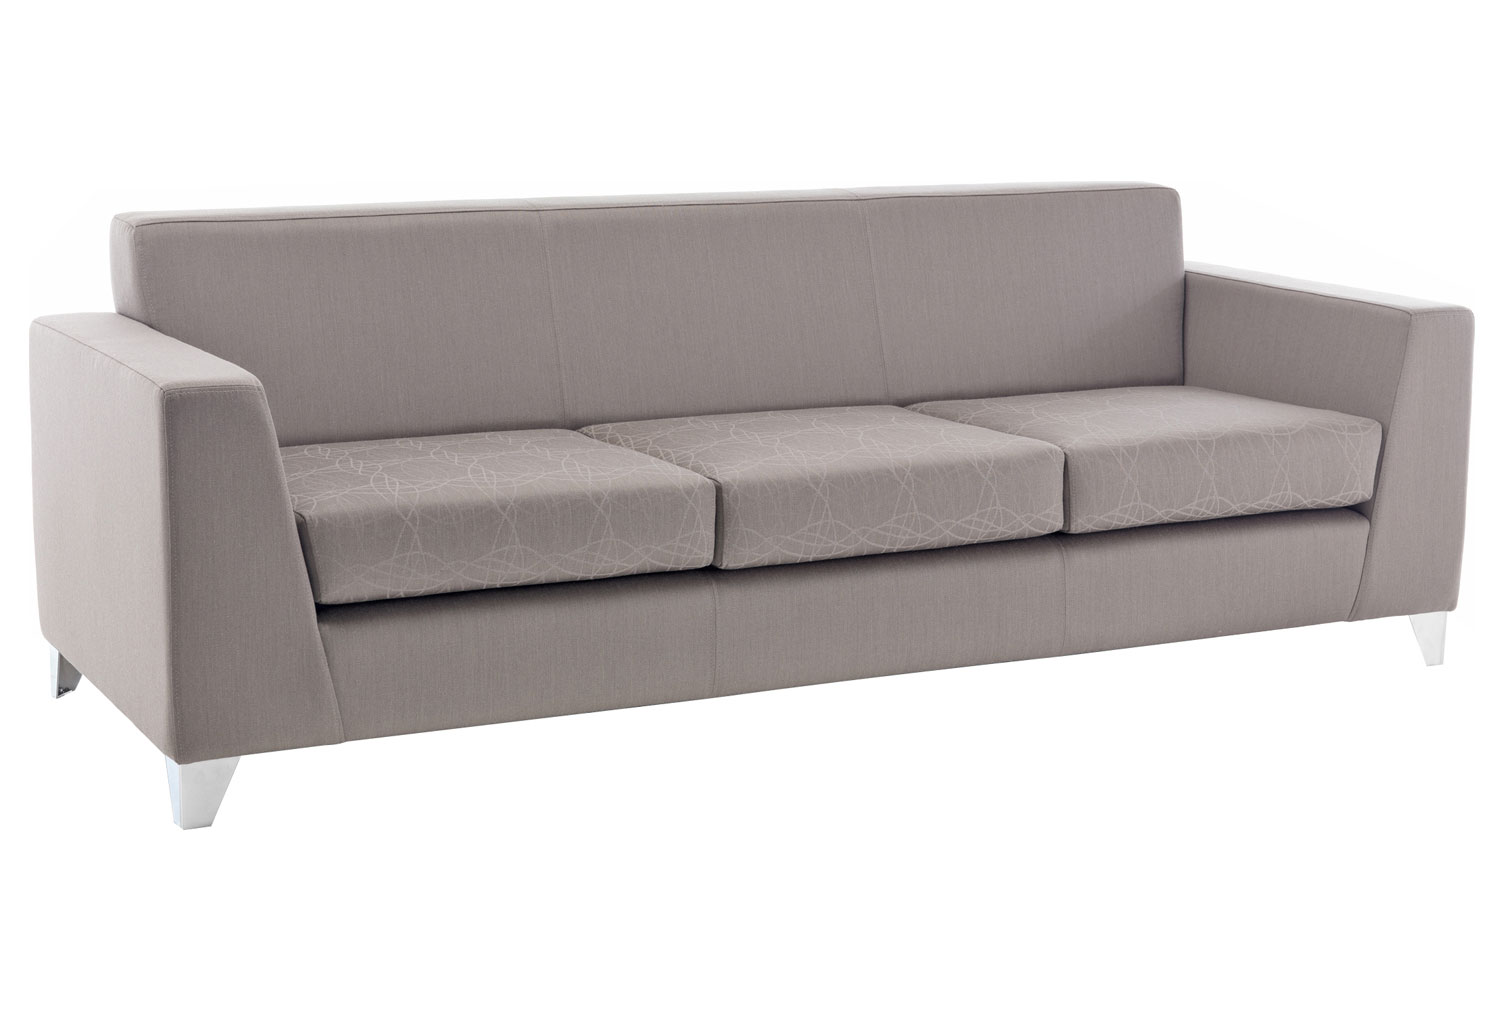 Emmett 3 Seater Sofa, Charcoal